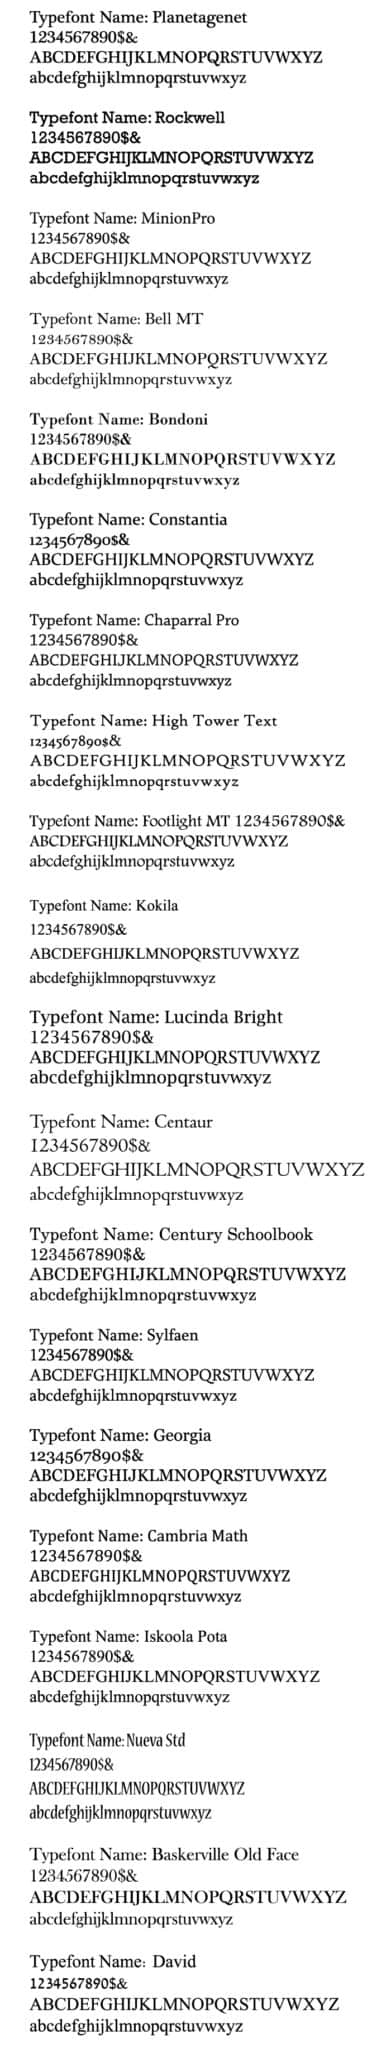 Planetagenet Serif Typestyles for brands